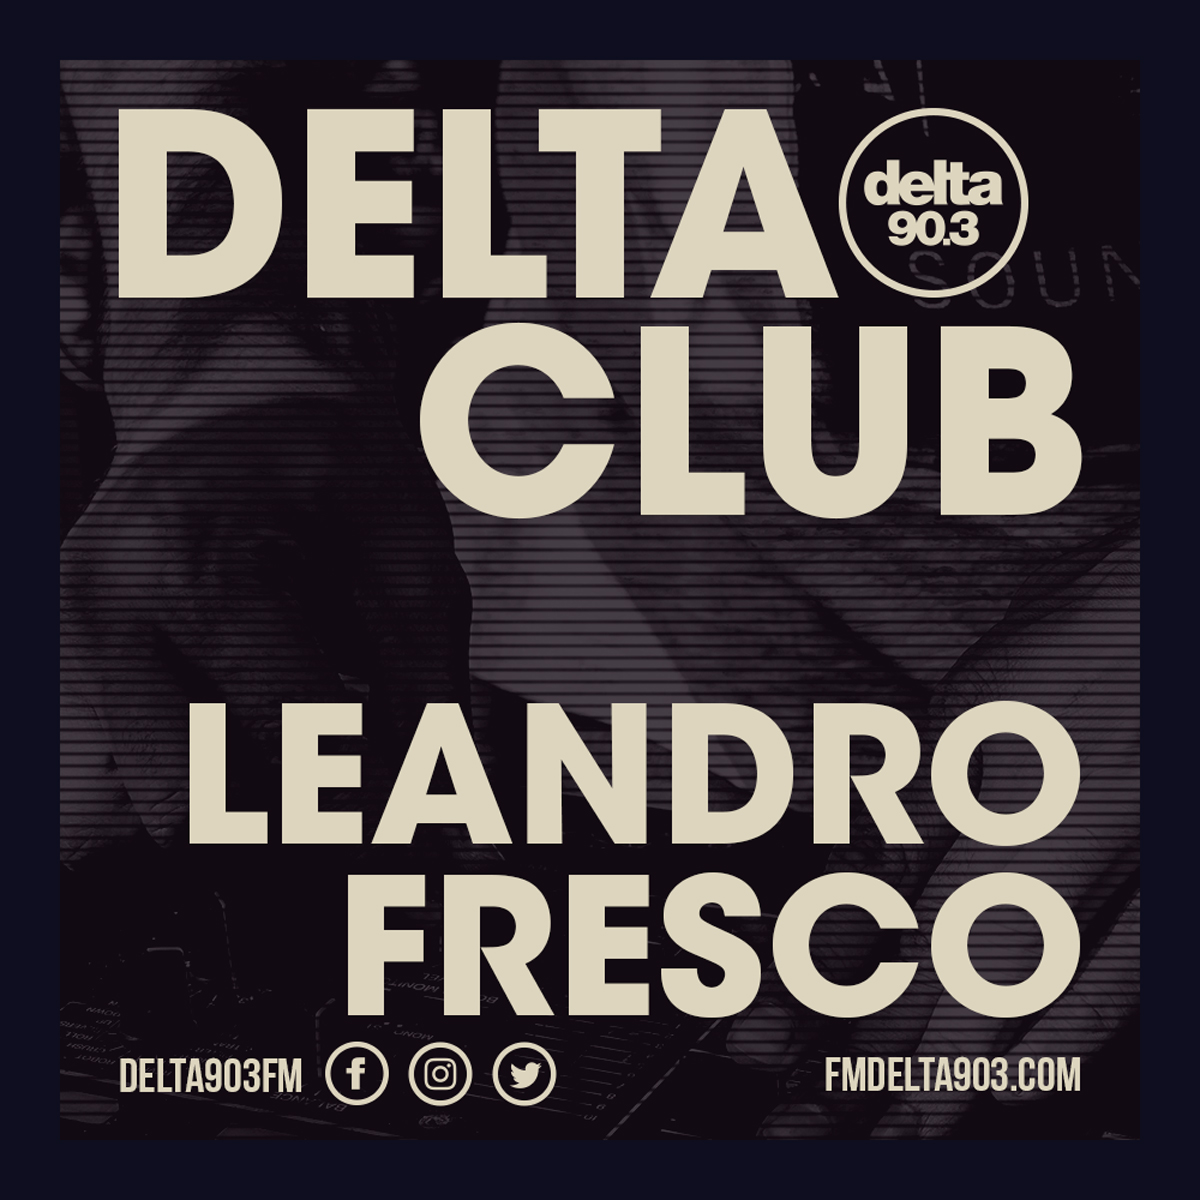 Delta Podcasts - Delta Club presents Leandro Fresco (28.06.2018)